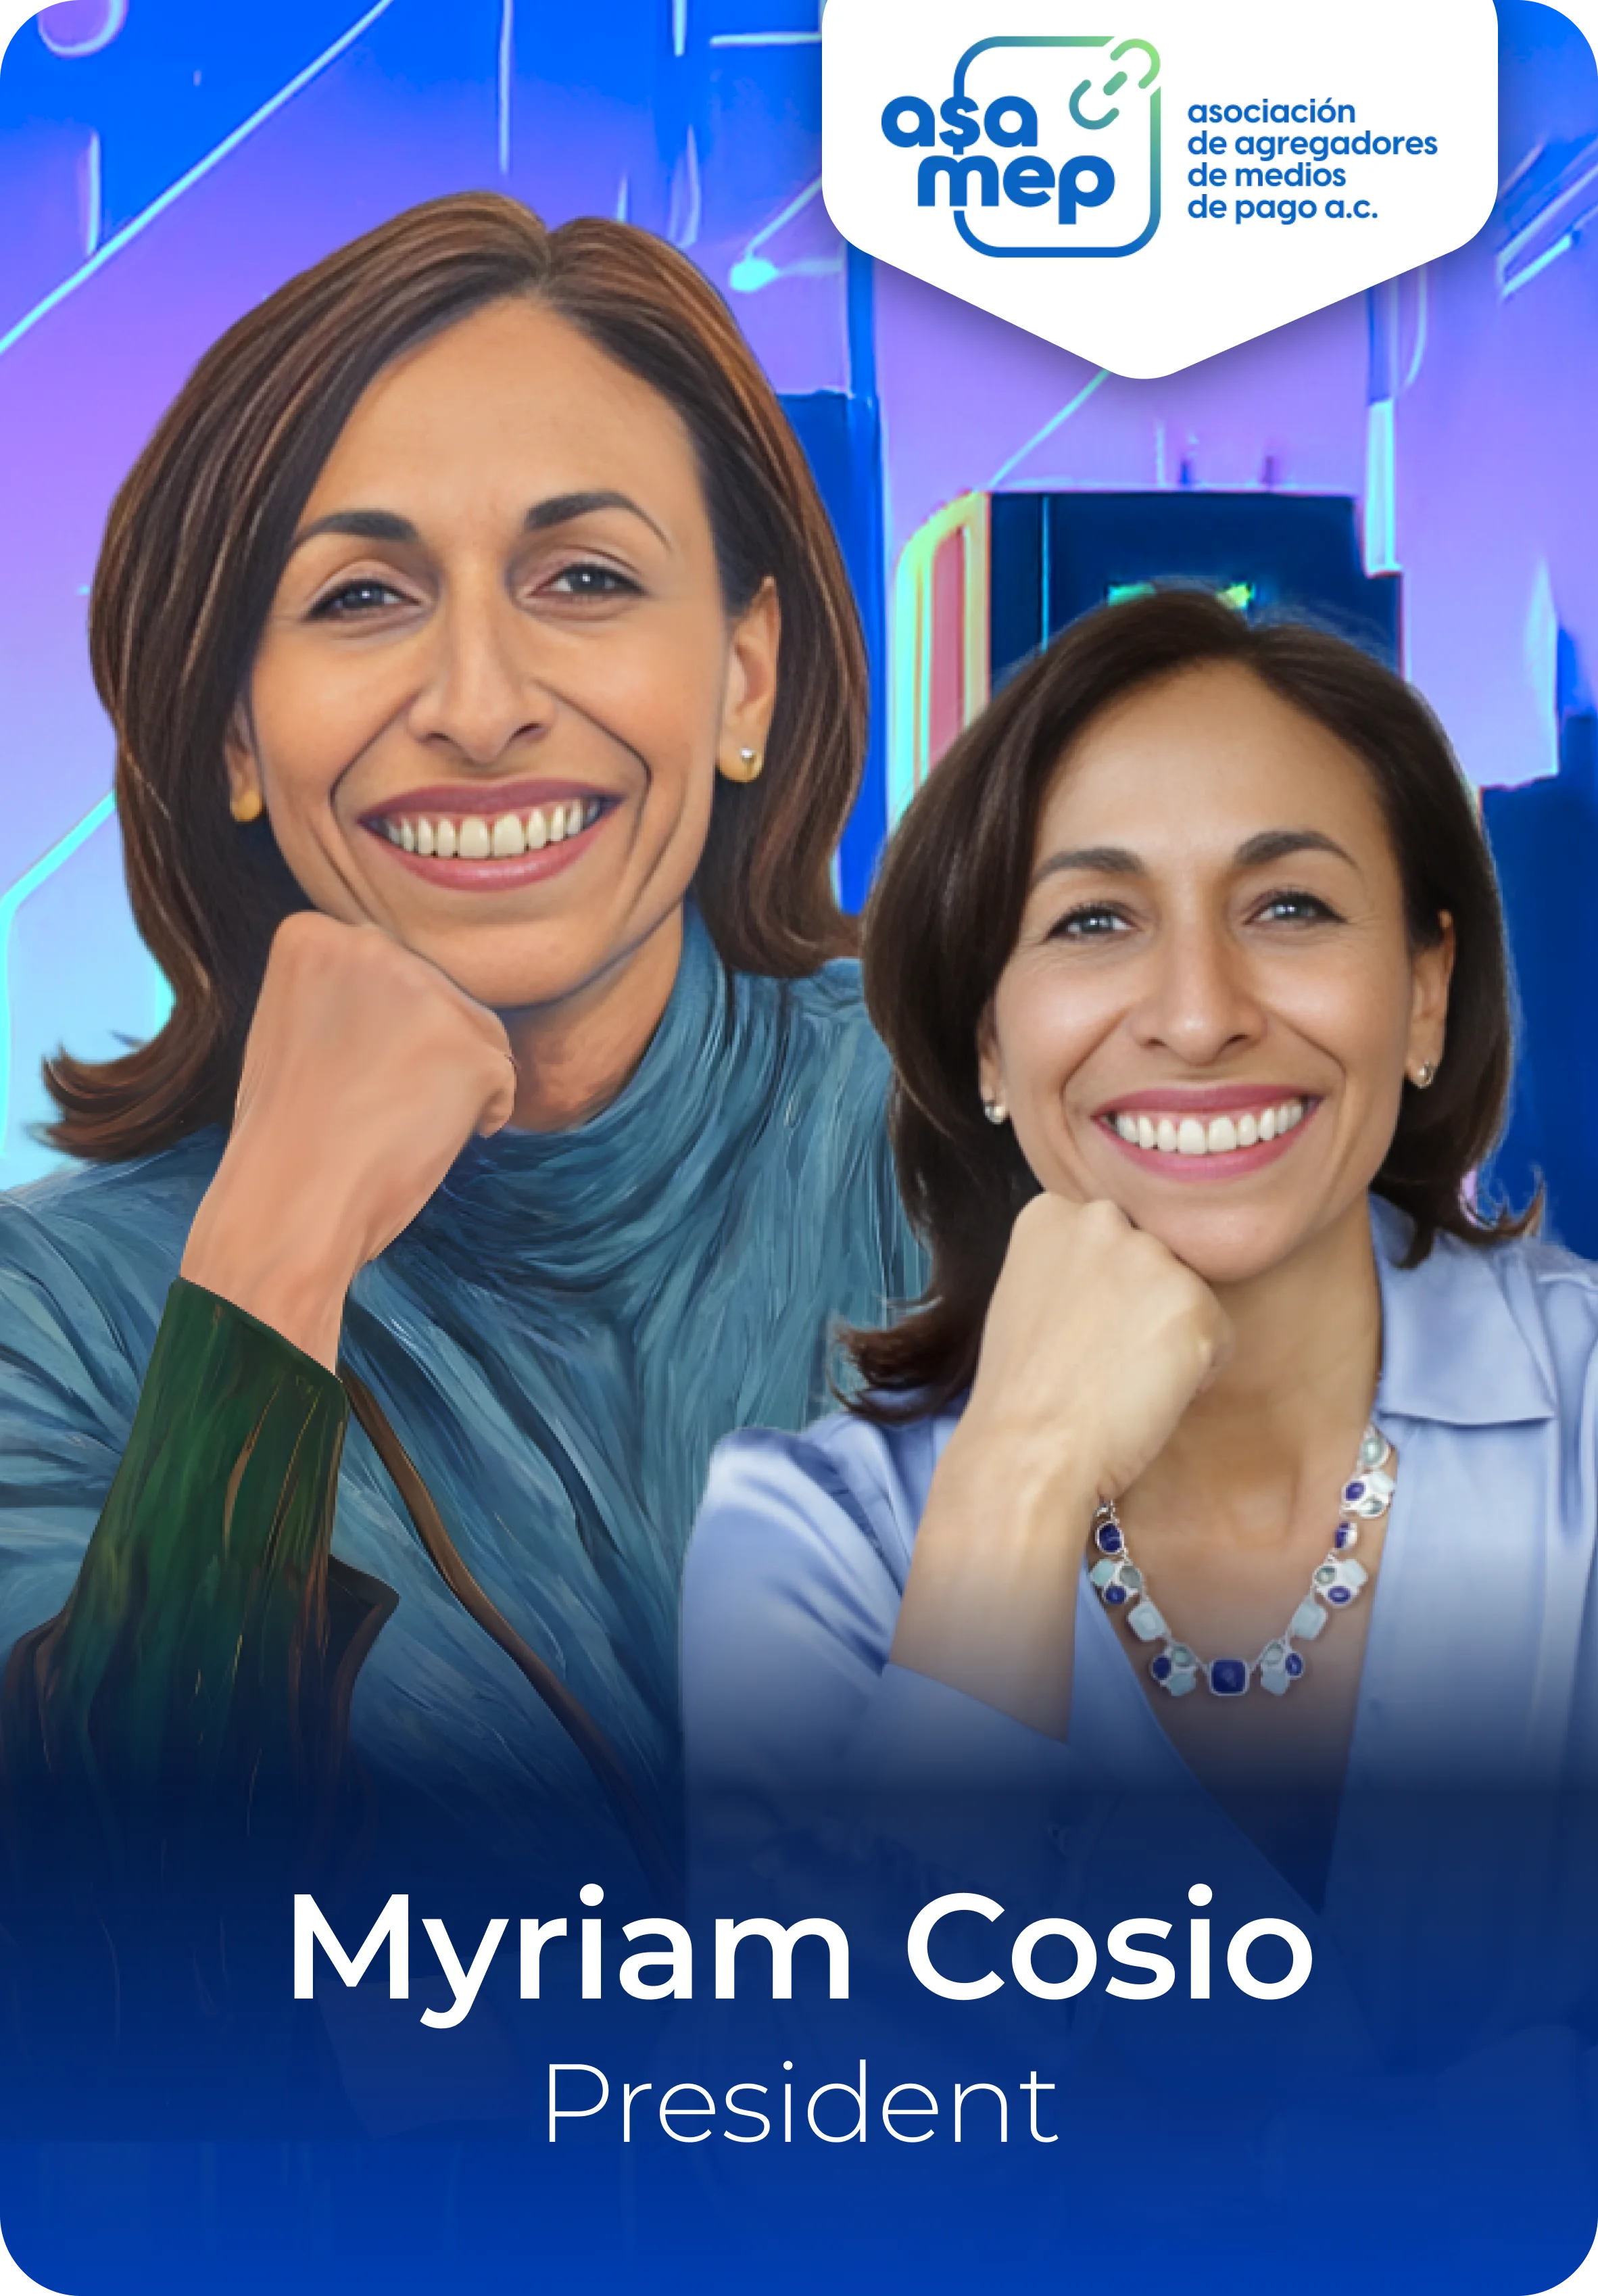 Myriam Cosio